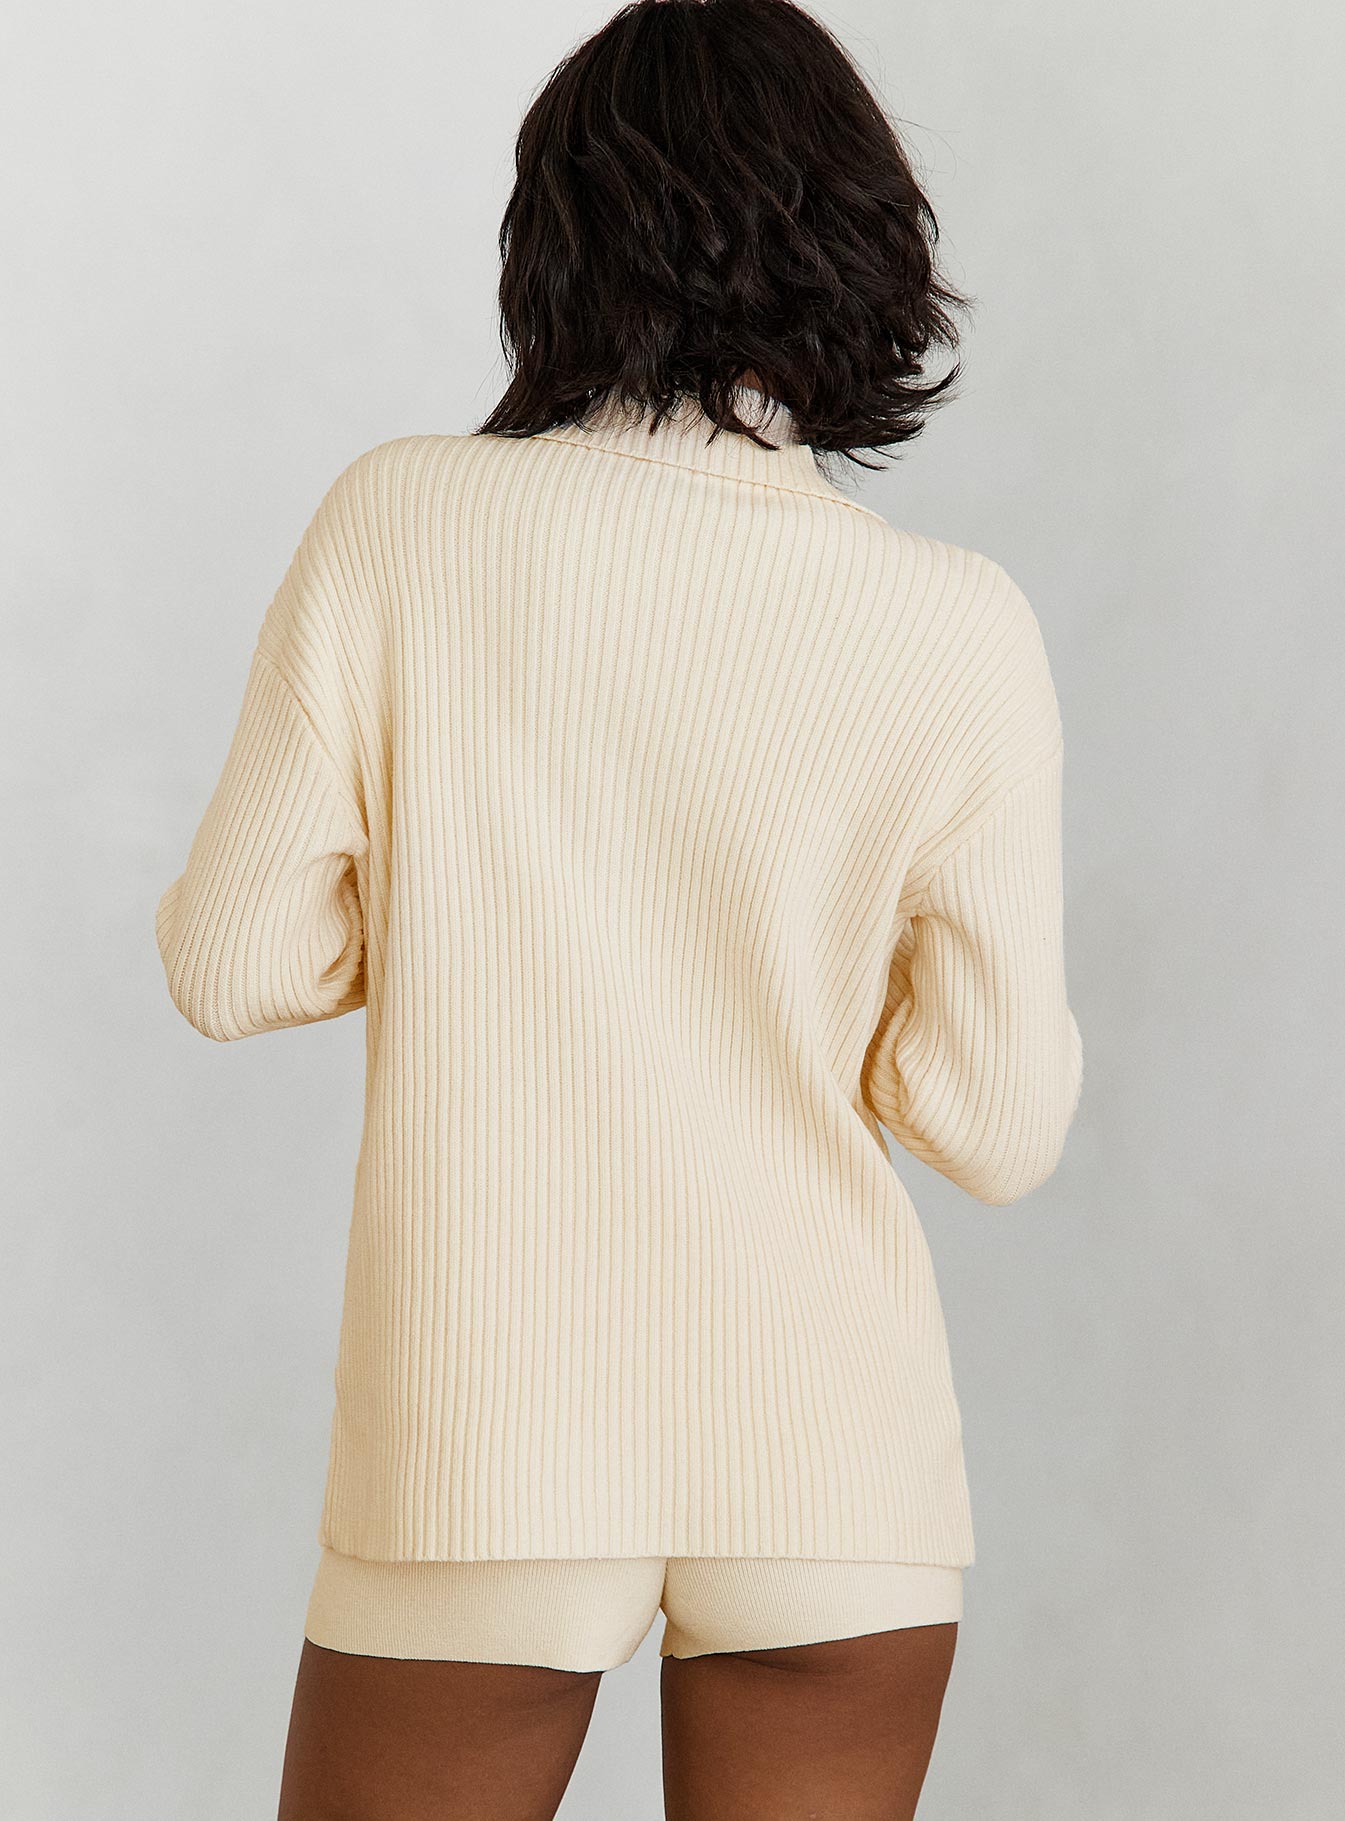 Jhett Long Sleeve Knit Shirt Cream